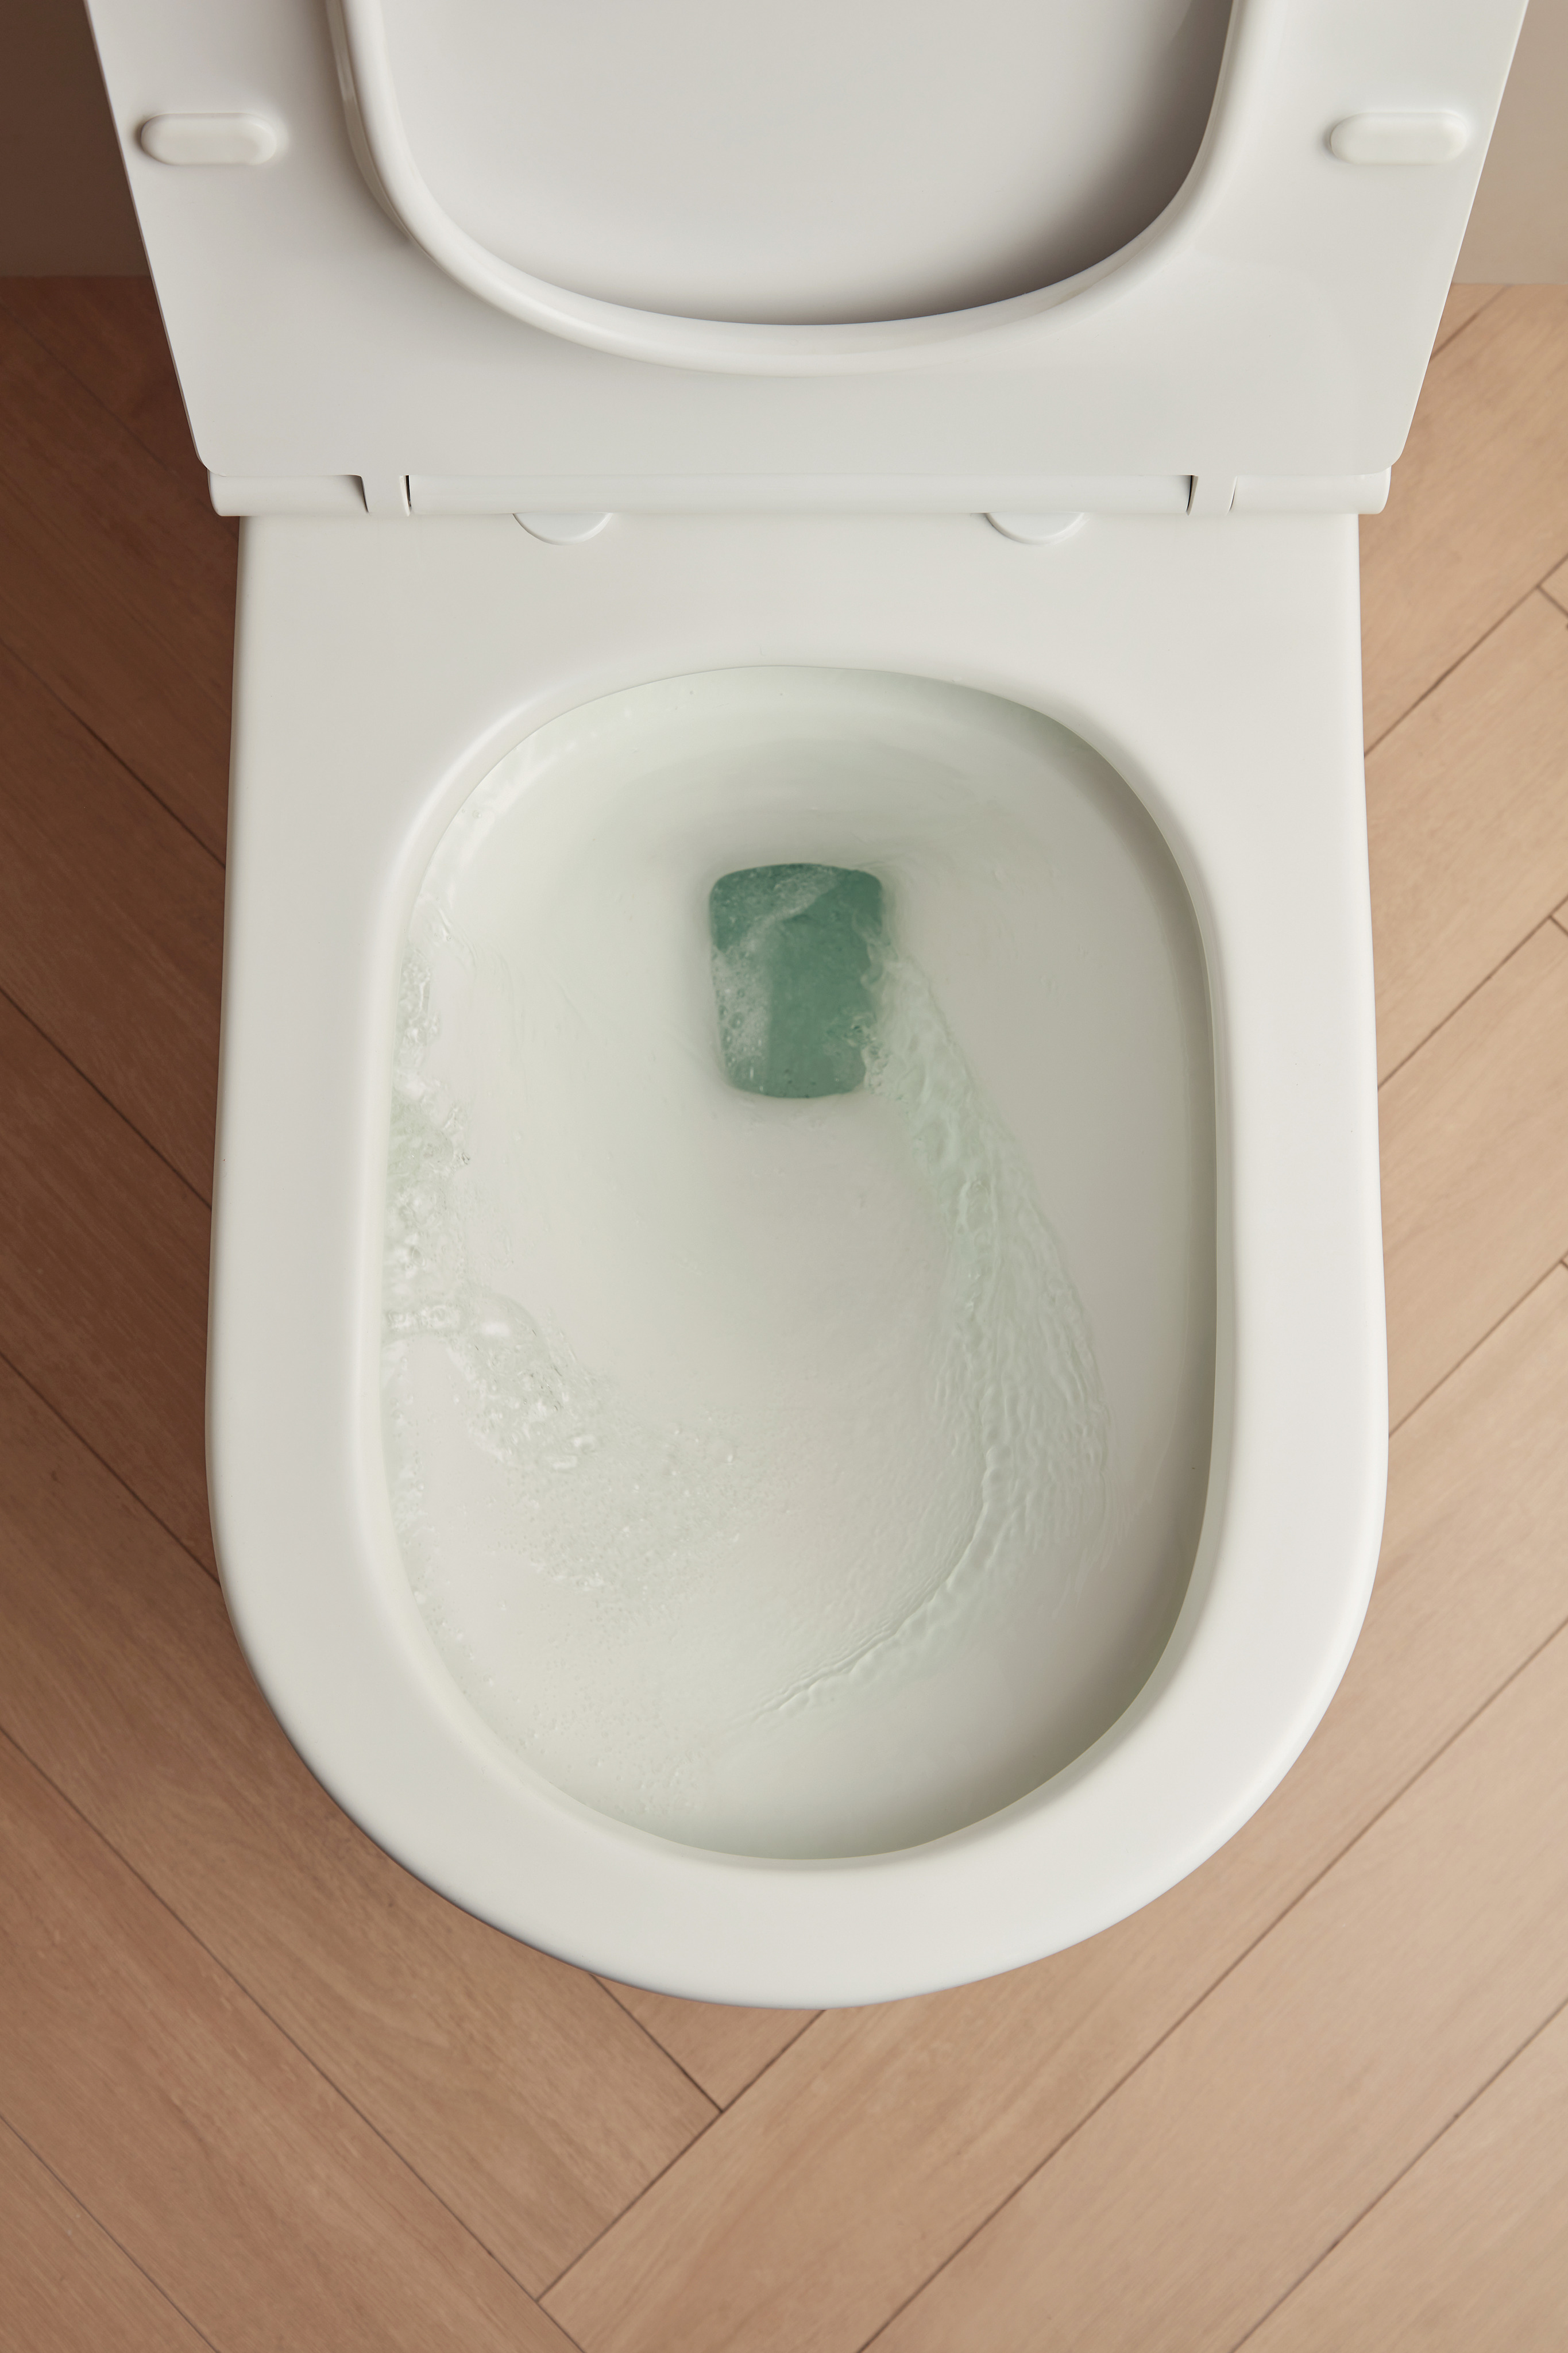 汉斯格雅toilet combinations: 谧境S, 连体坐便器305mm, 货号22431007 